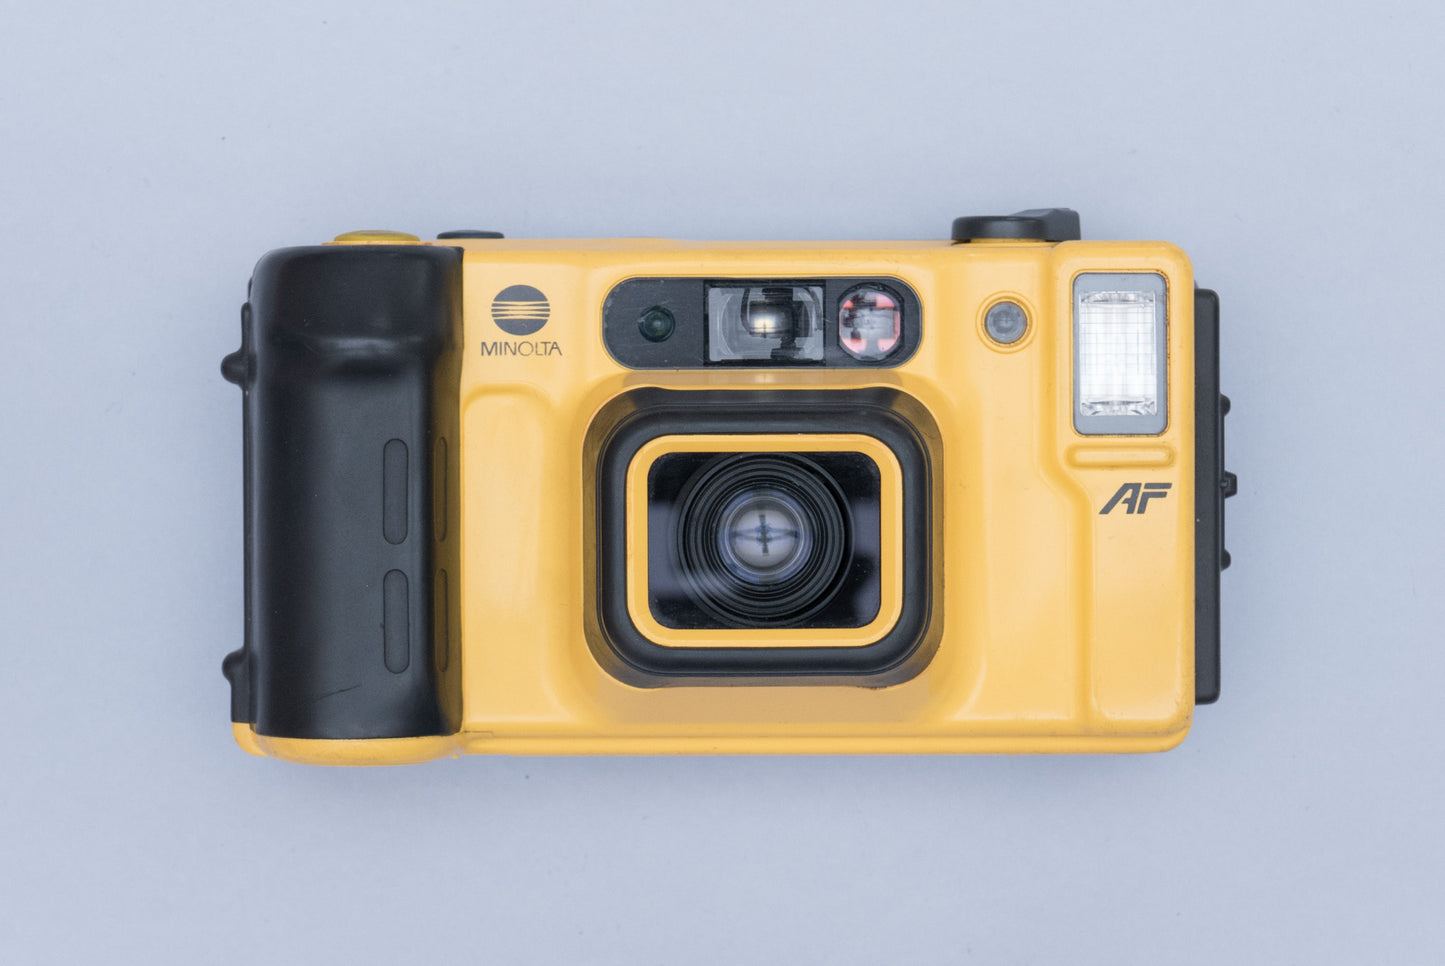 Minolta Weathermatic 35DL 35mm Compact Film Camera